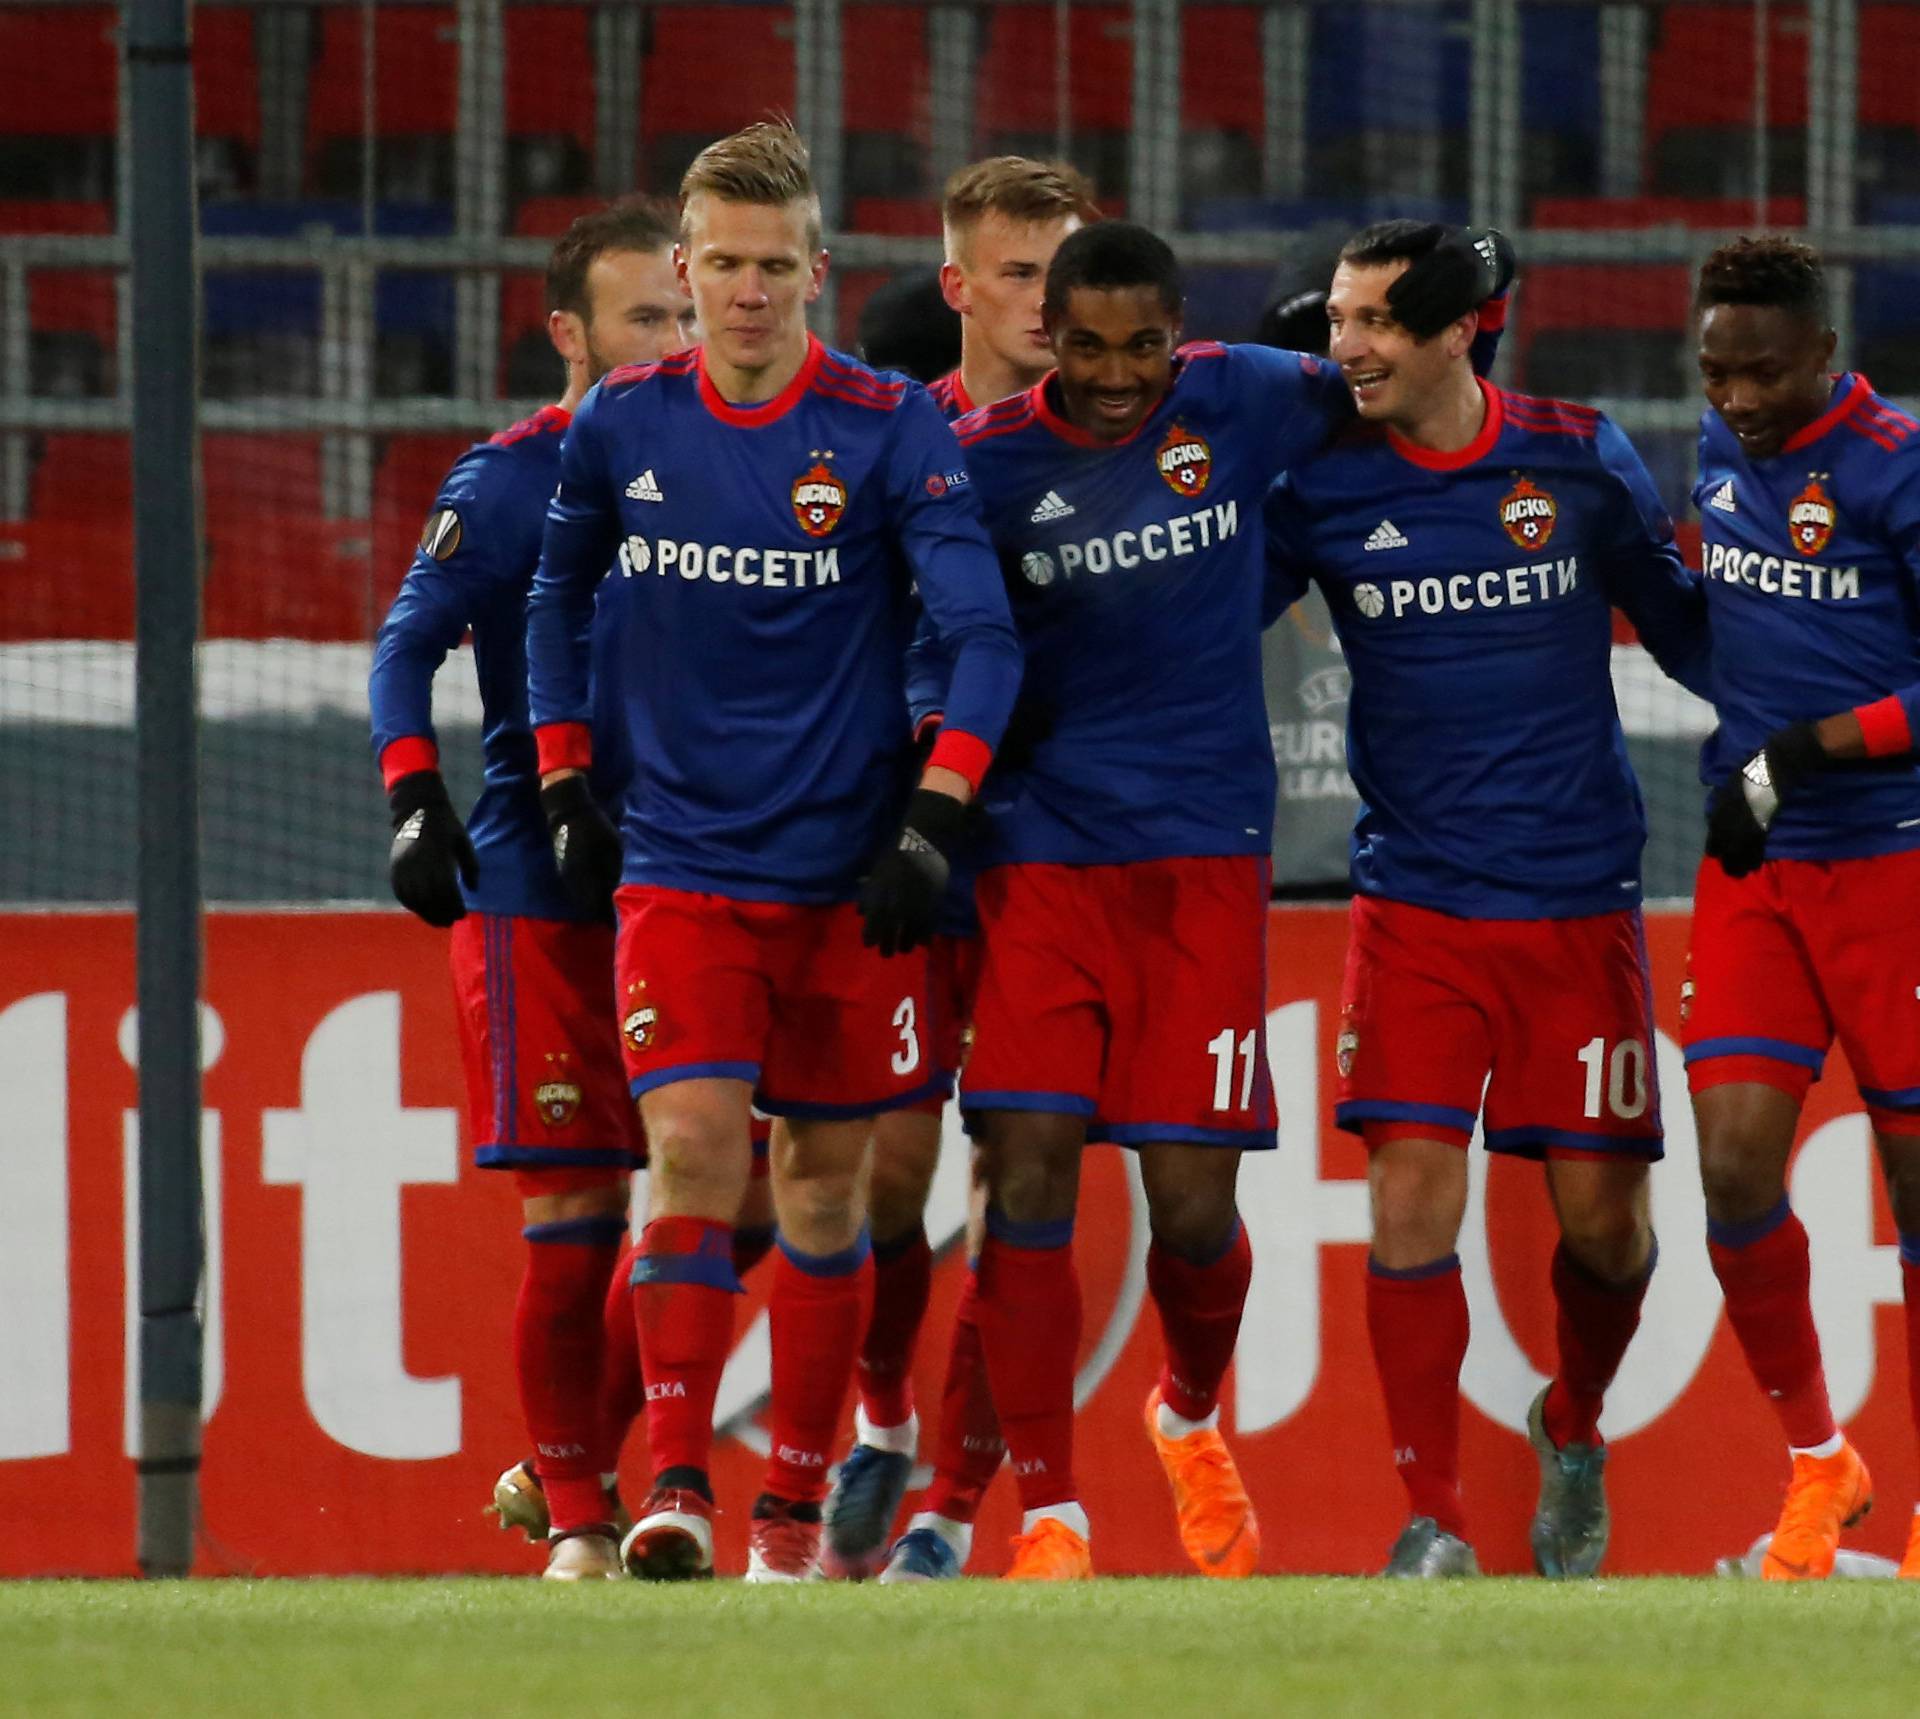 Europa League Round of 32 Second Leg - CSKA Moscow vs Red Star Belgrade